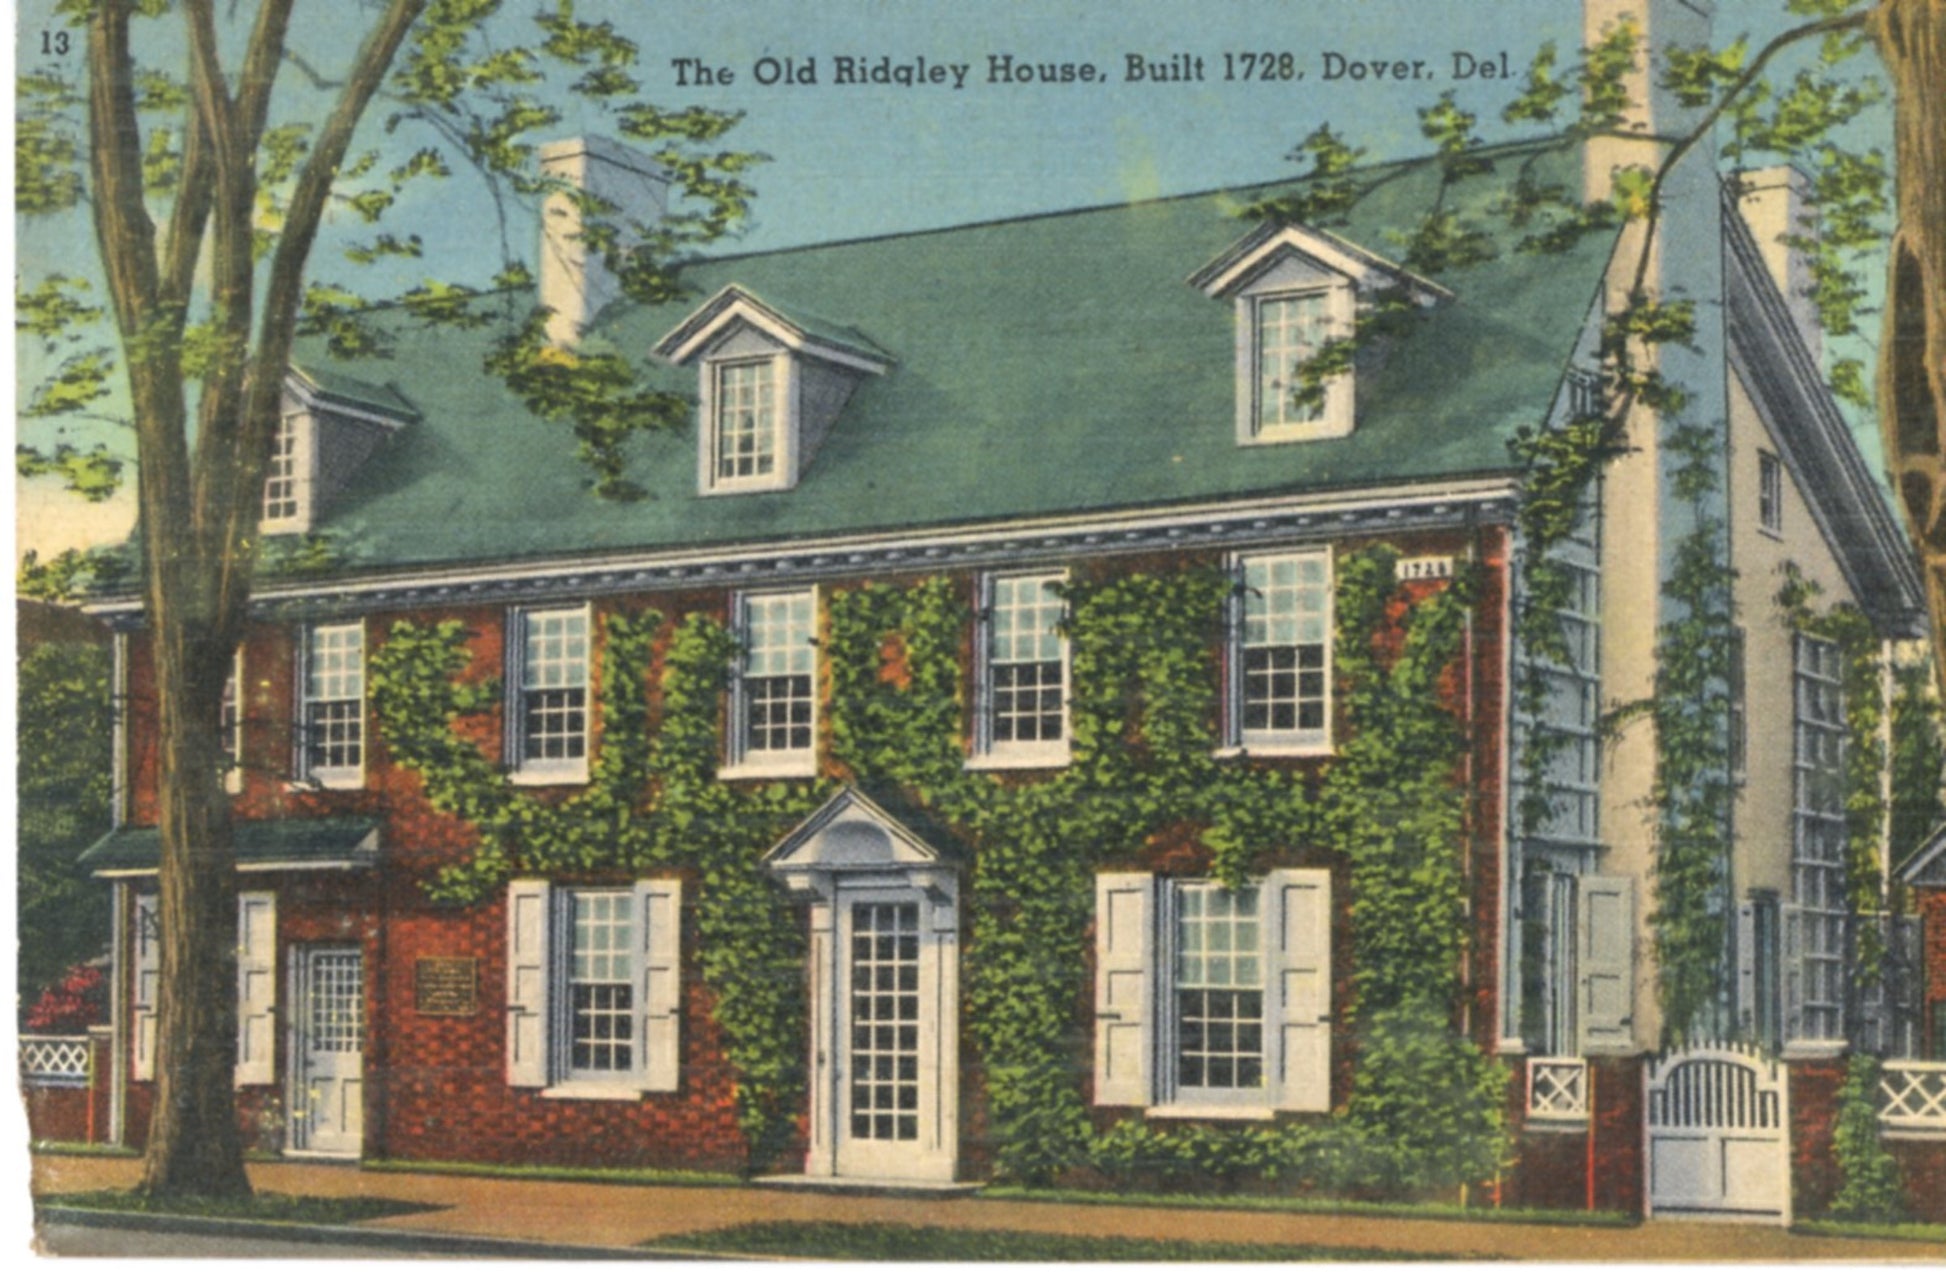 The Old Ridgley House Built 1728 DOVER DELAWARE Vintage Linen Postcard